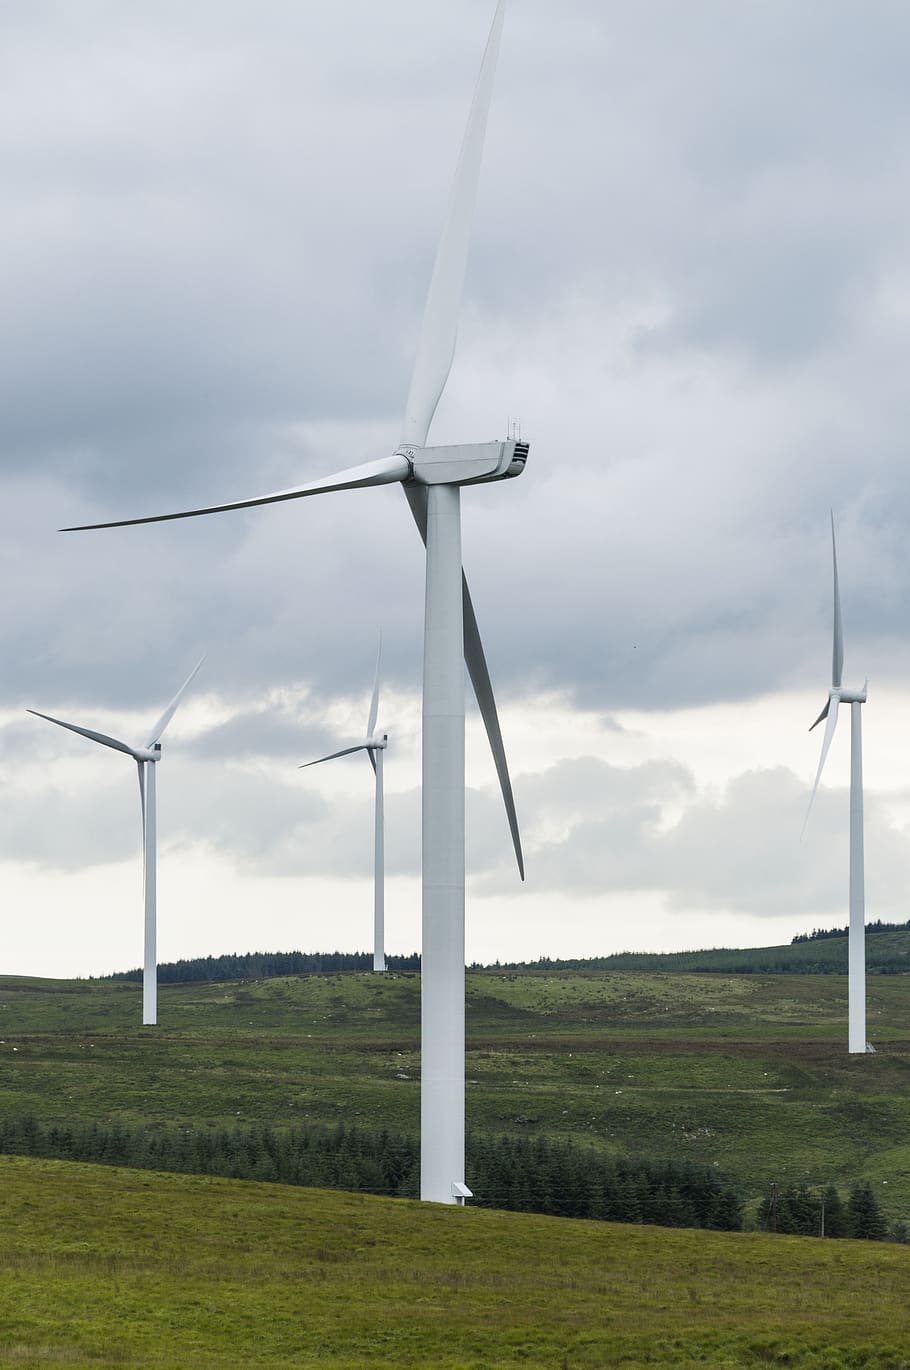 landscape, wind farm, wind turbine, energy, electricity, power, nature, environment, turbine, renewable